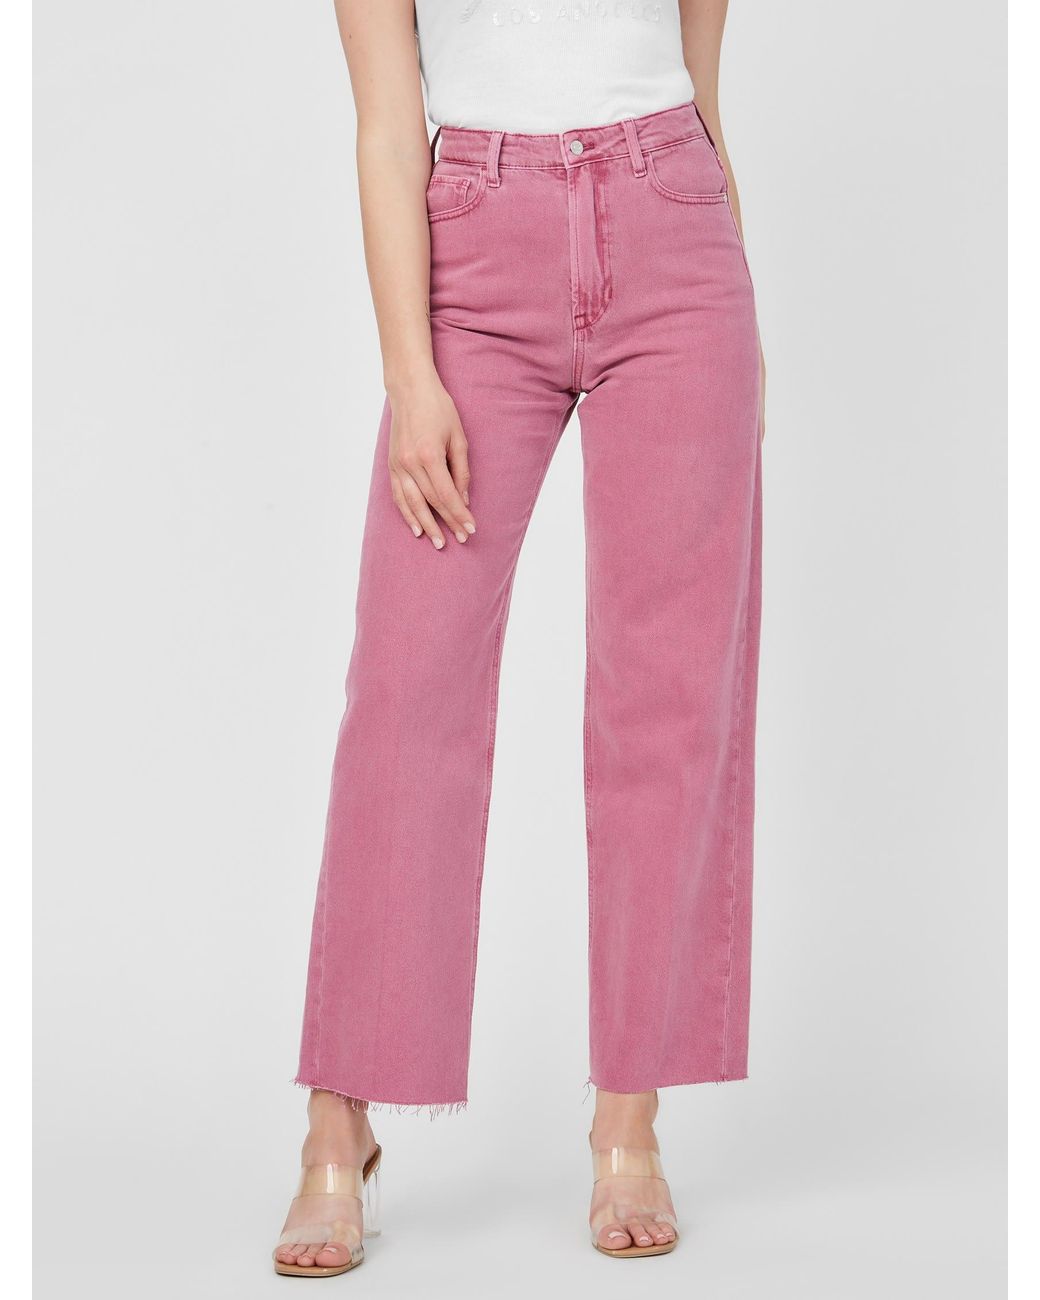 Guess Factory Darah Ultra High-rise Denim Jeans in Pink | Lyst